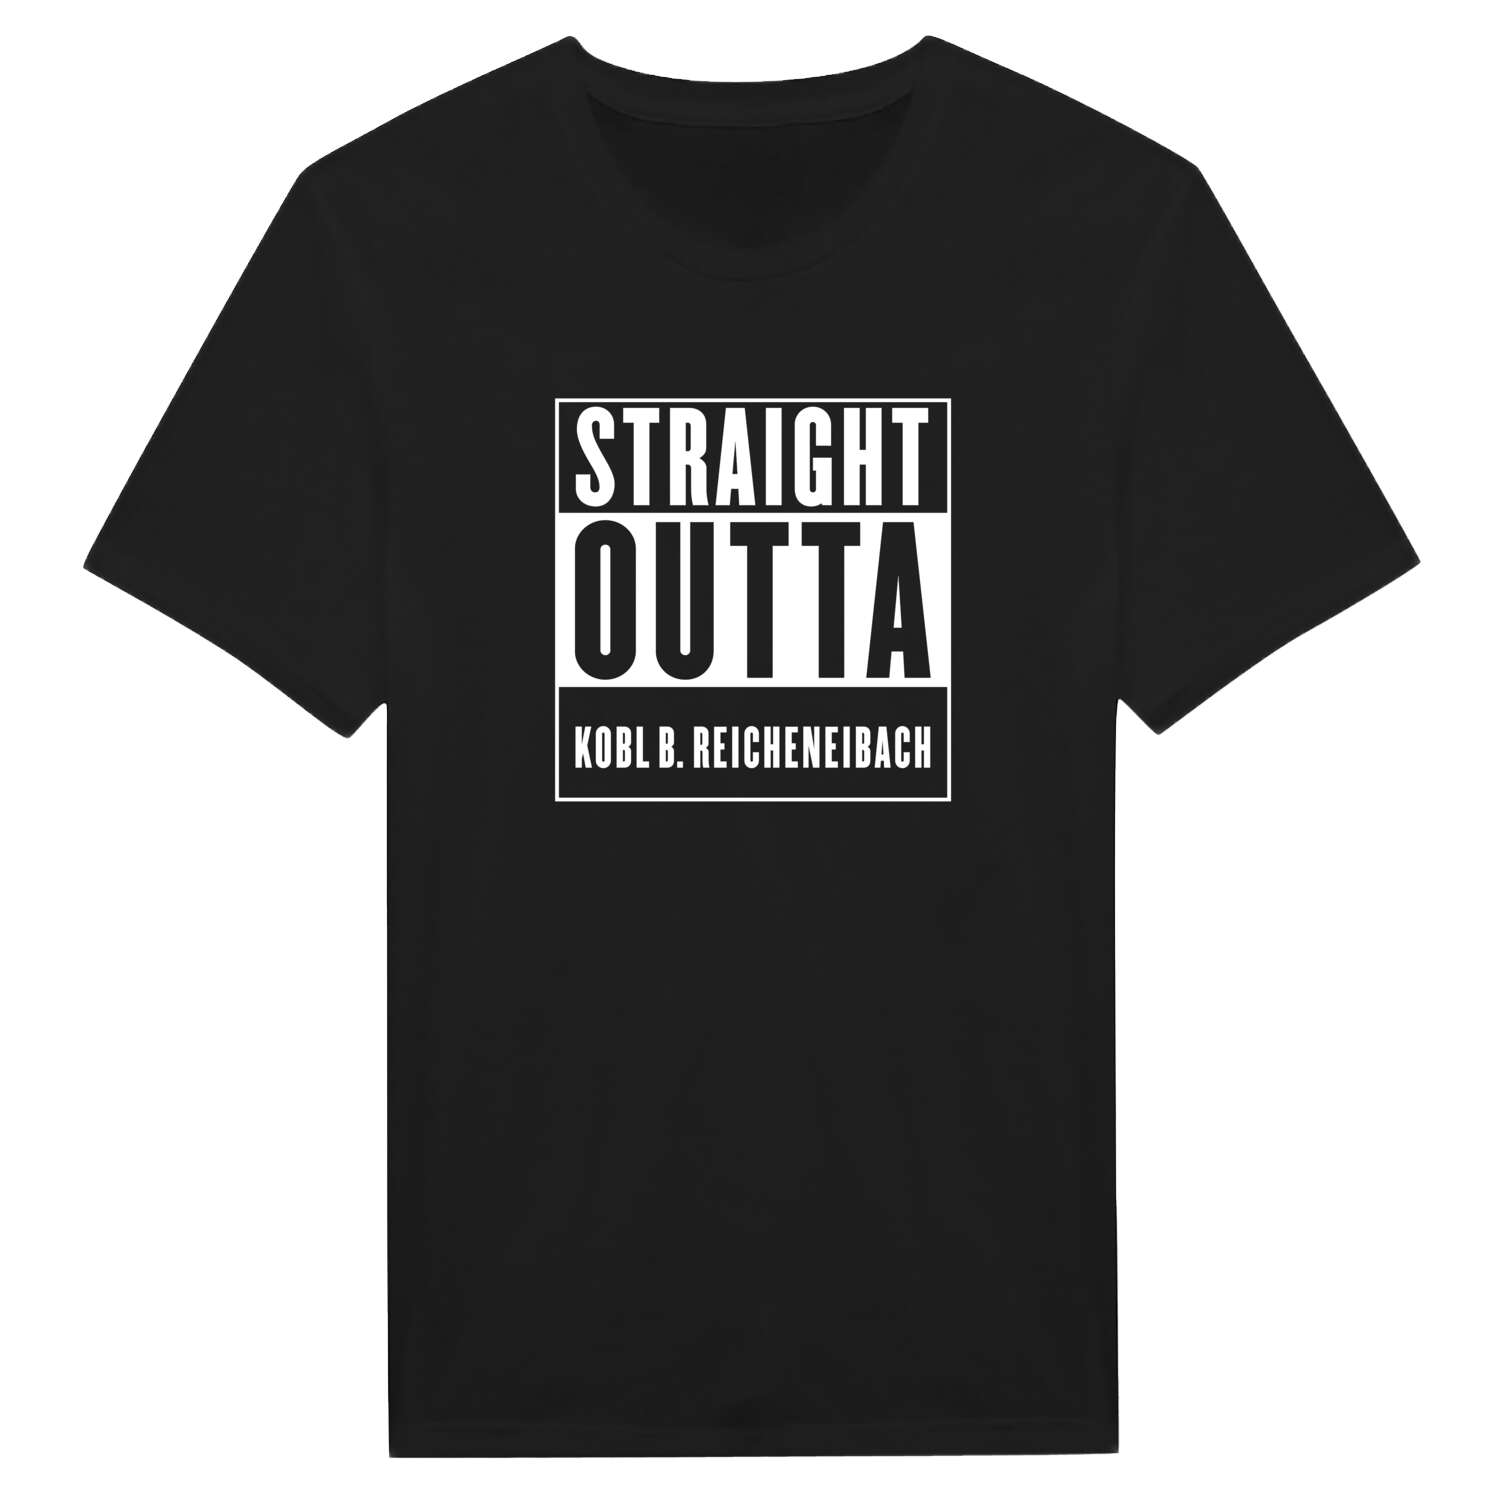 Kobl b. Reicheneibach T-Shirt »Straight Outta«